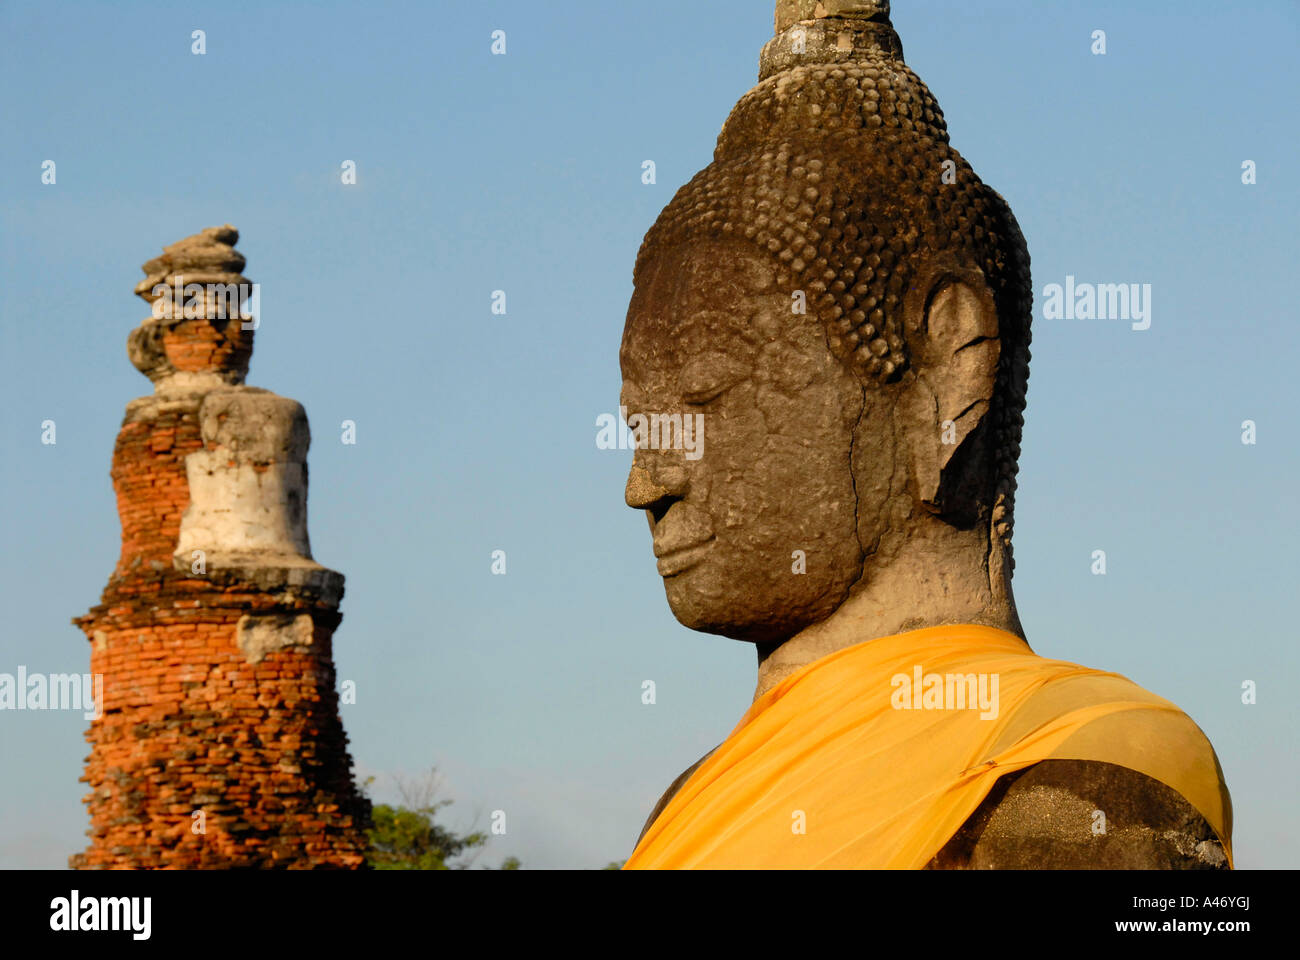 Head of a Buddha figure facing a brick tower Wat Mahathat Ayutthaya Thailand Stock Photo